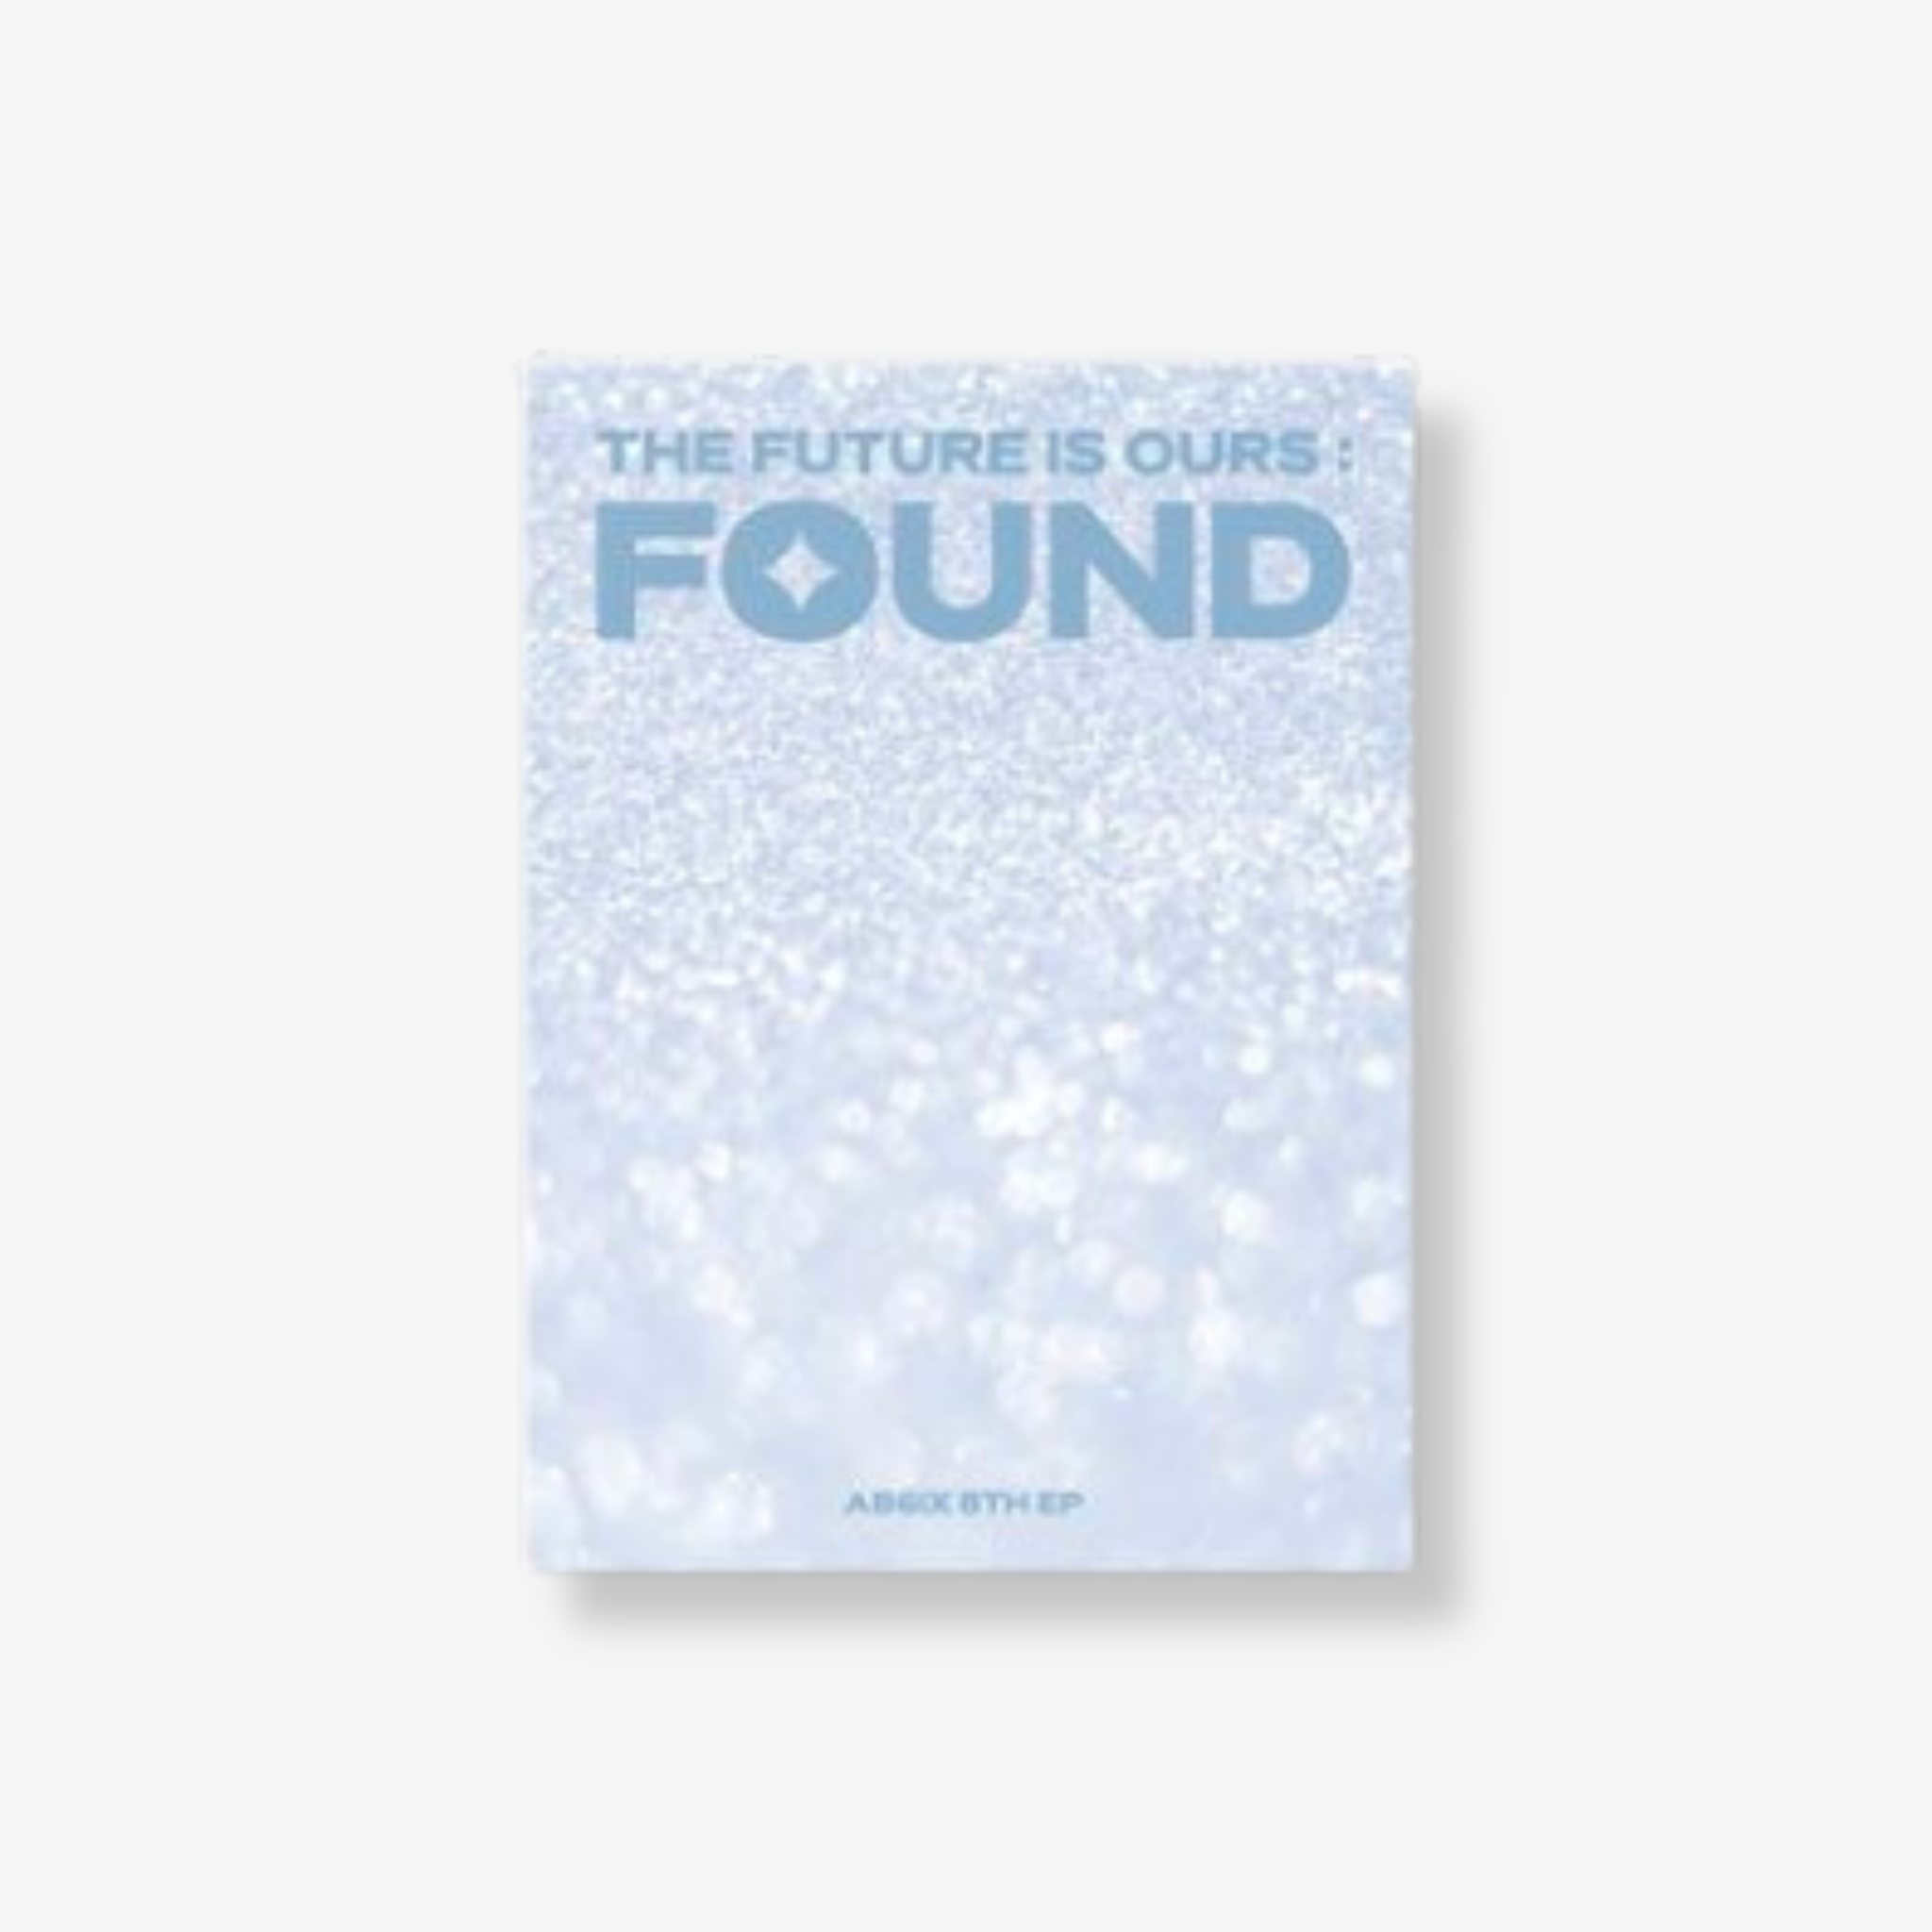 AB6IX 8th EP Album "THE FUTURE IS OURS : FOUND" (Platform Ver.)